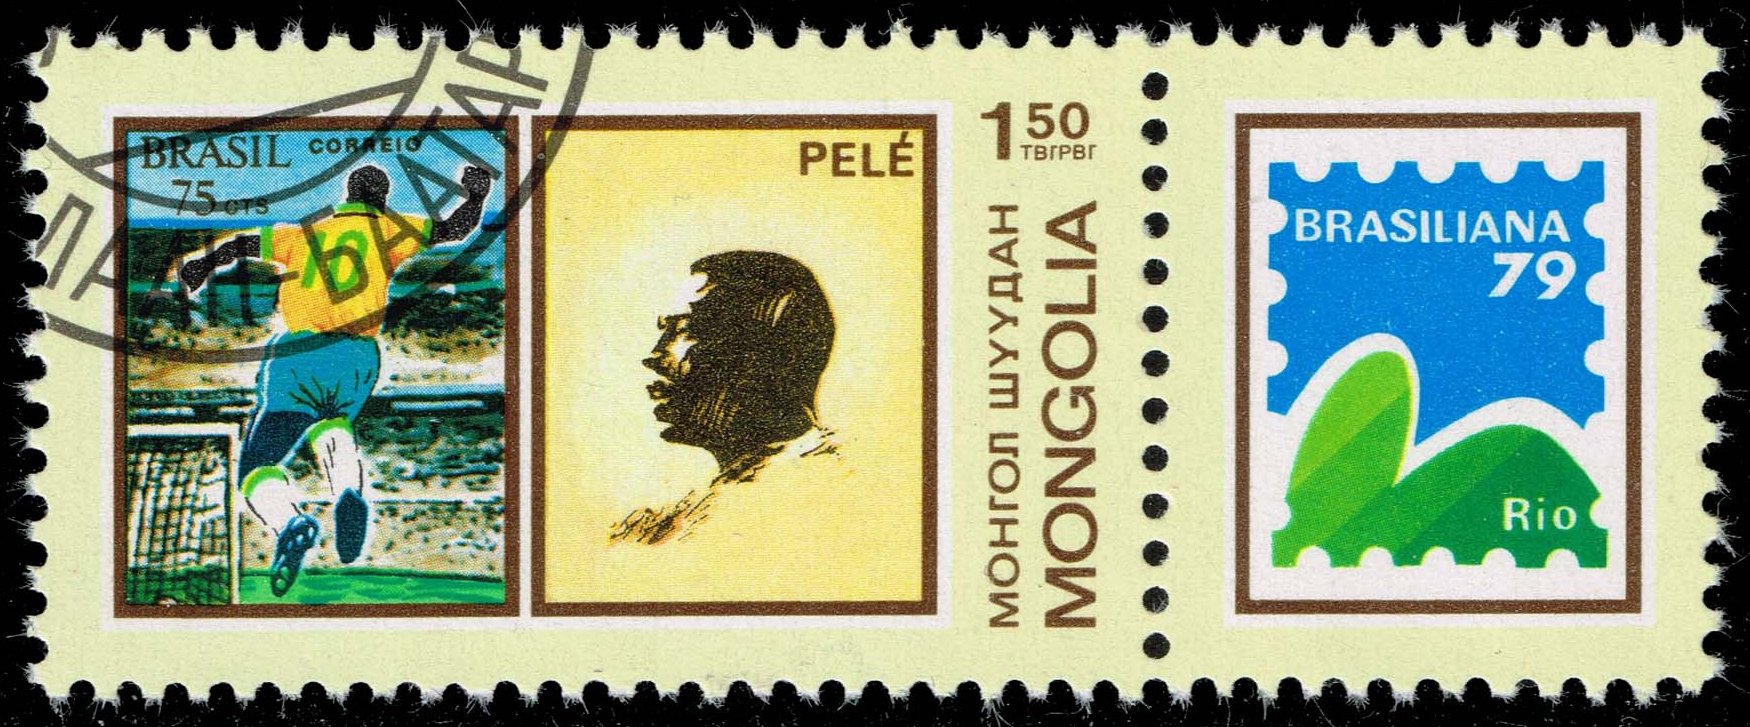 Mongolia #1096b Brazil #1144 of Pele plus label; CTO